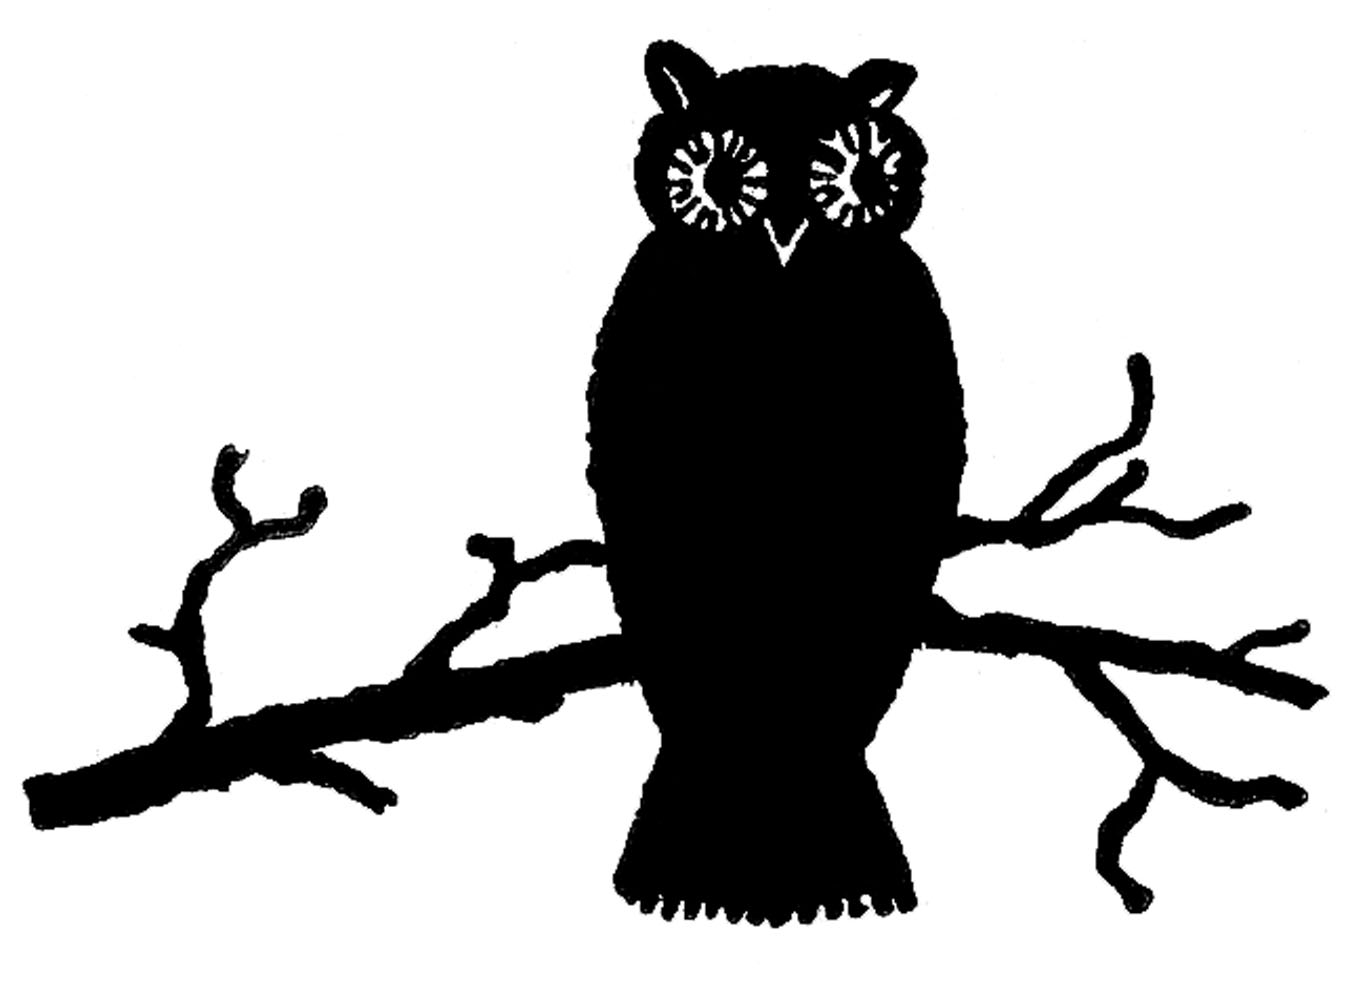 Vintage Halloween Clip Art - Cute Owl Silhouette - The ...